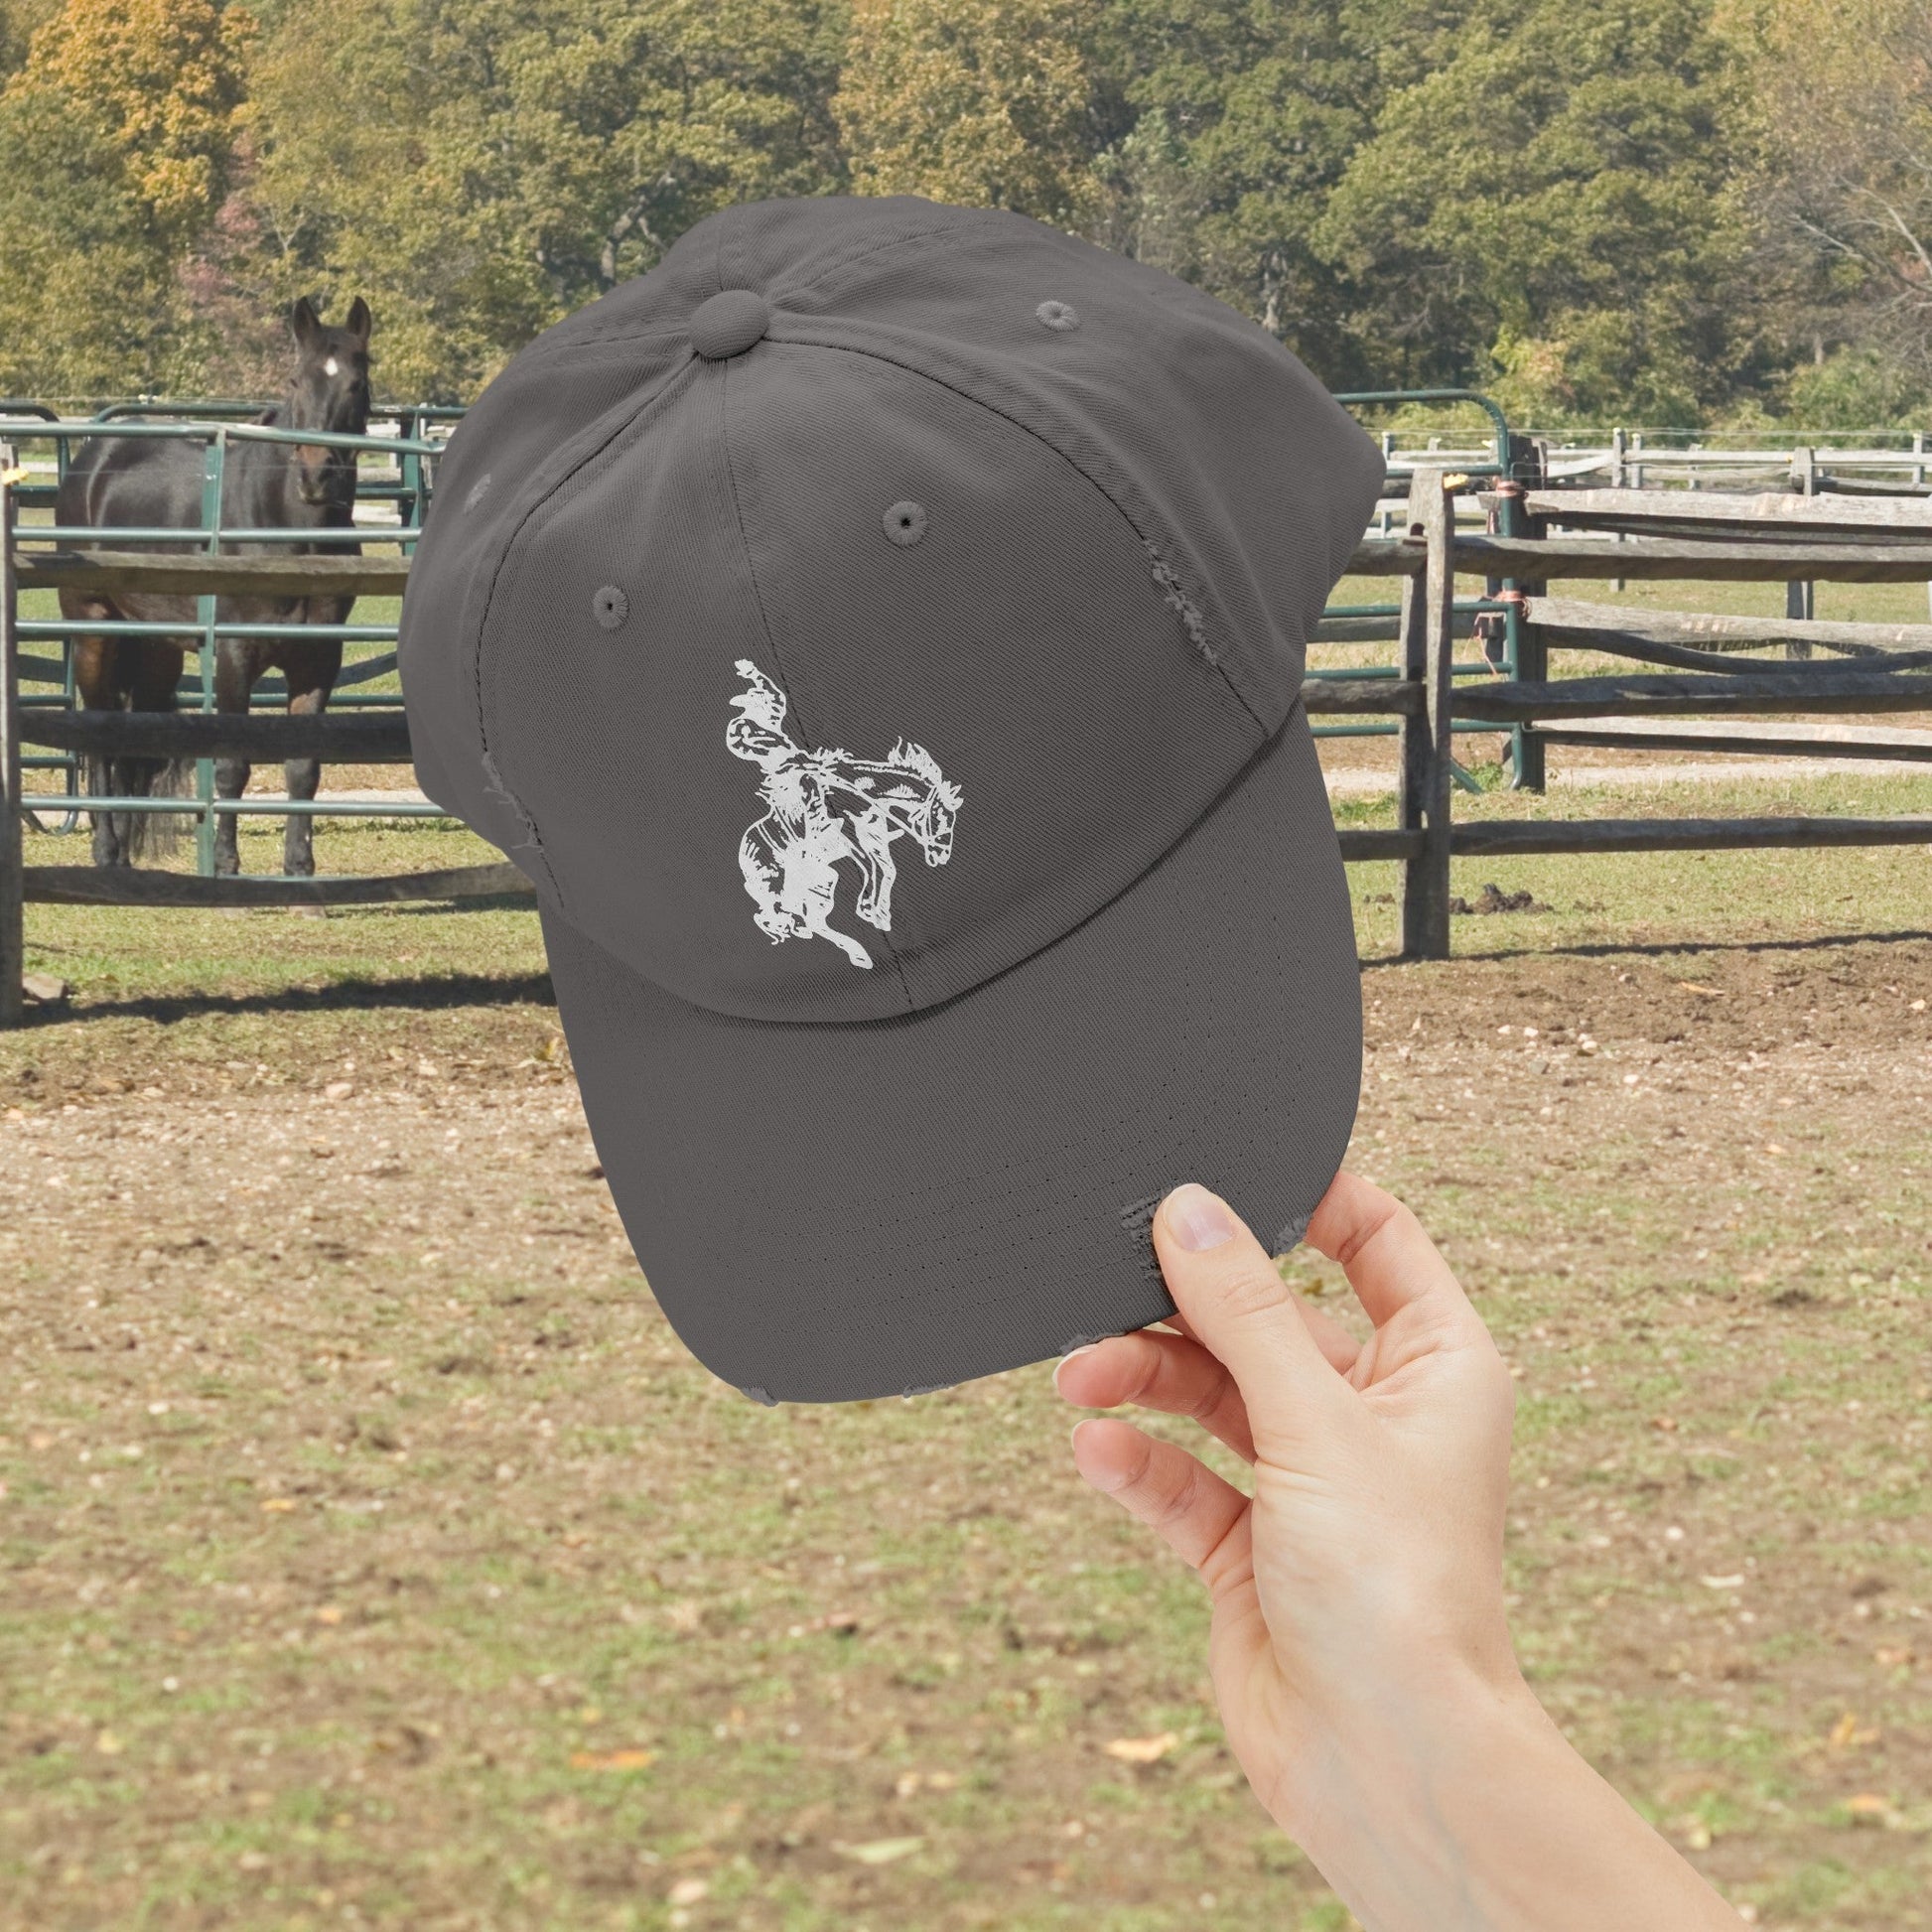 Rodeo Bronc Rider Horse Hat Cap, Horse Art Baseball Cap of Bucking Horse - FlooredByArt